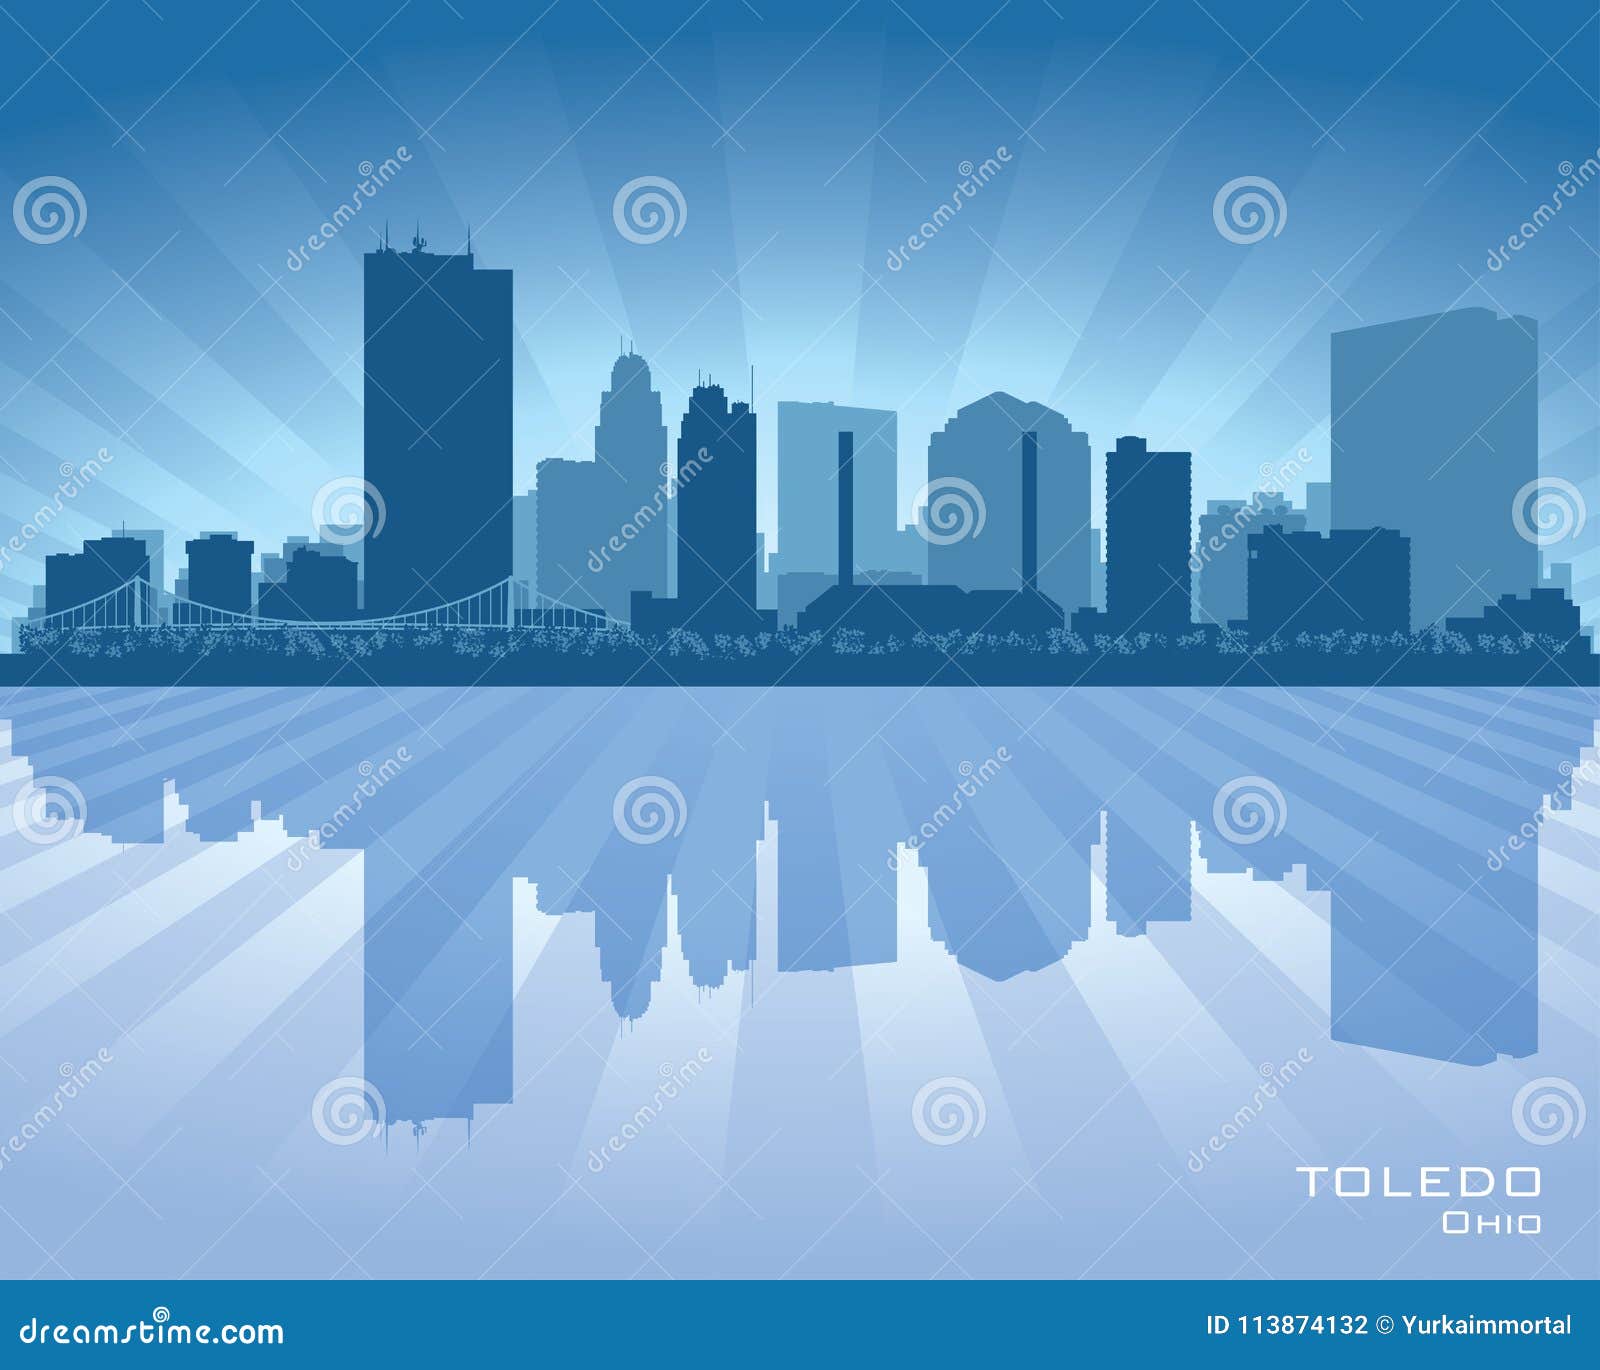 toledo ohio city skyline  silhouette